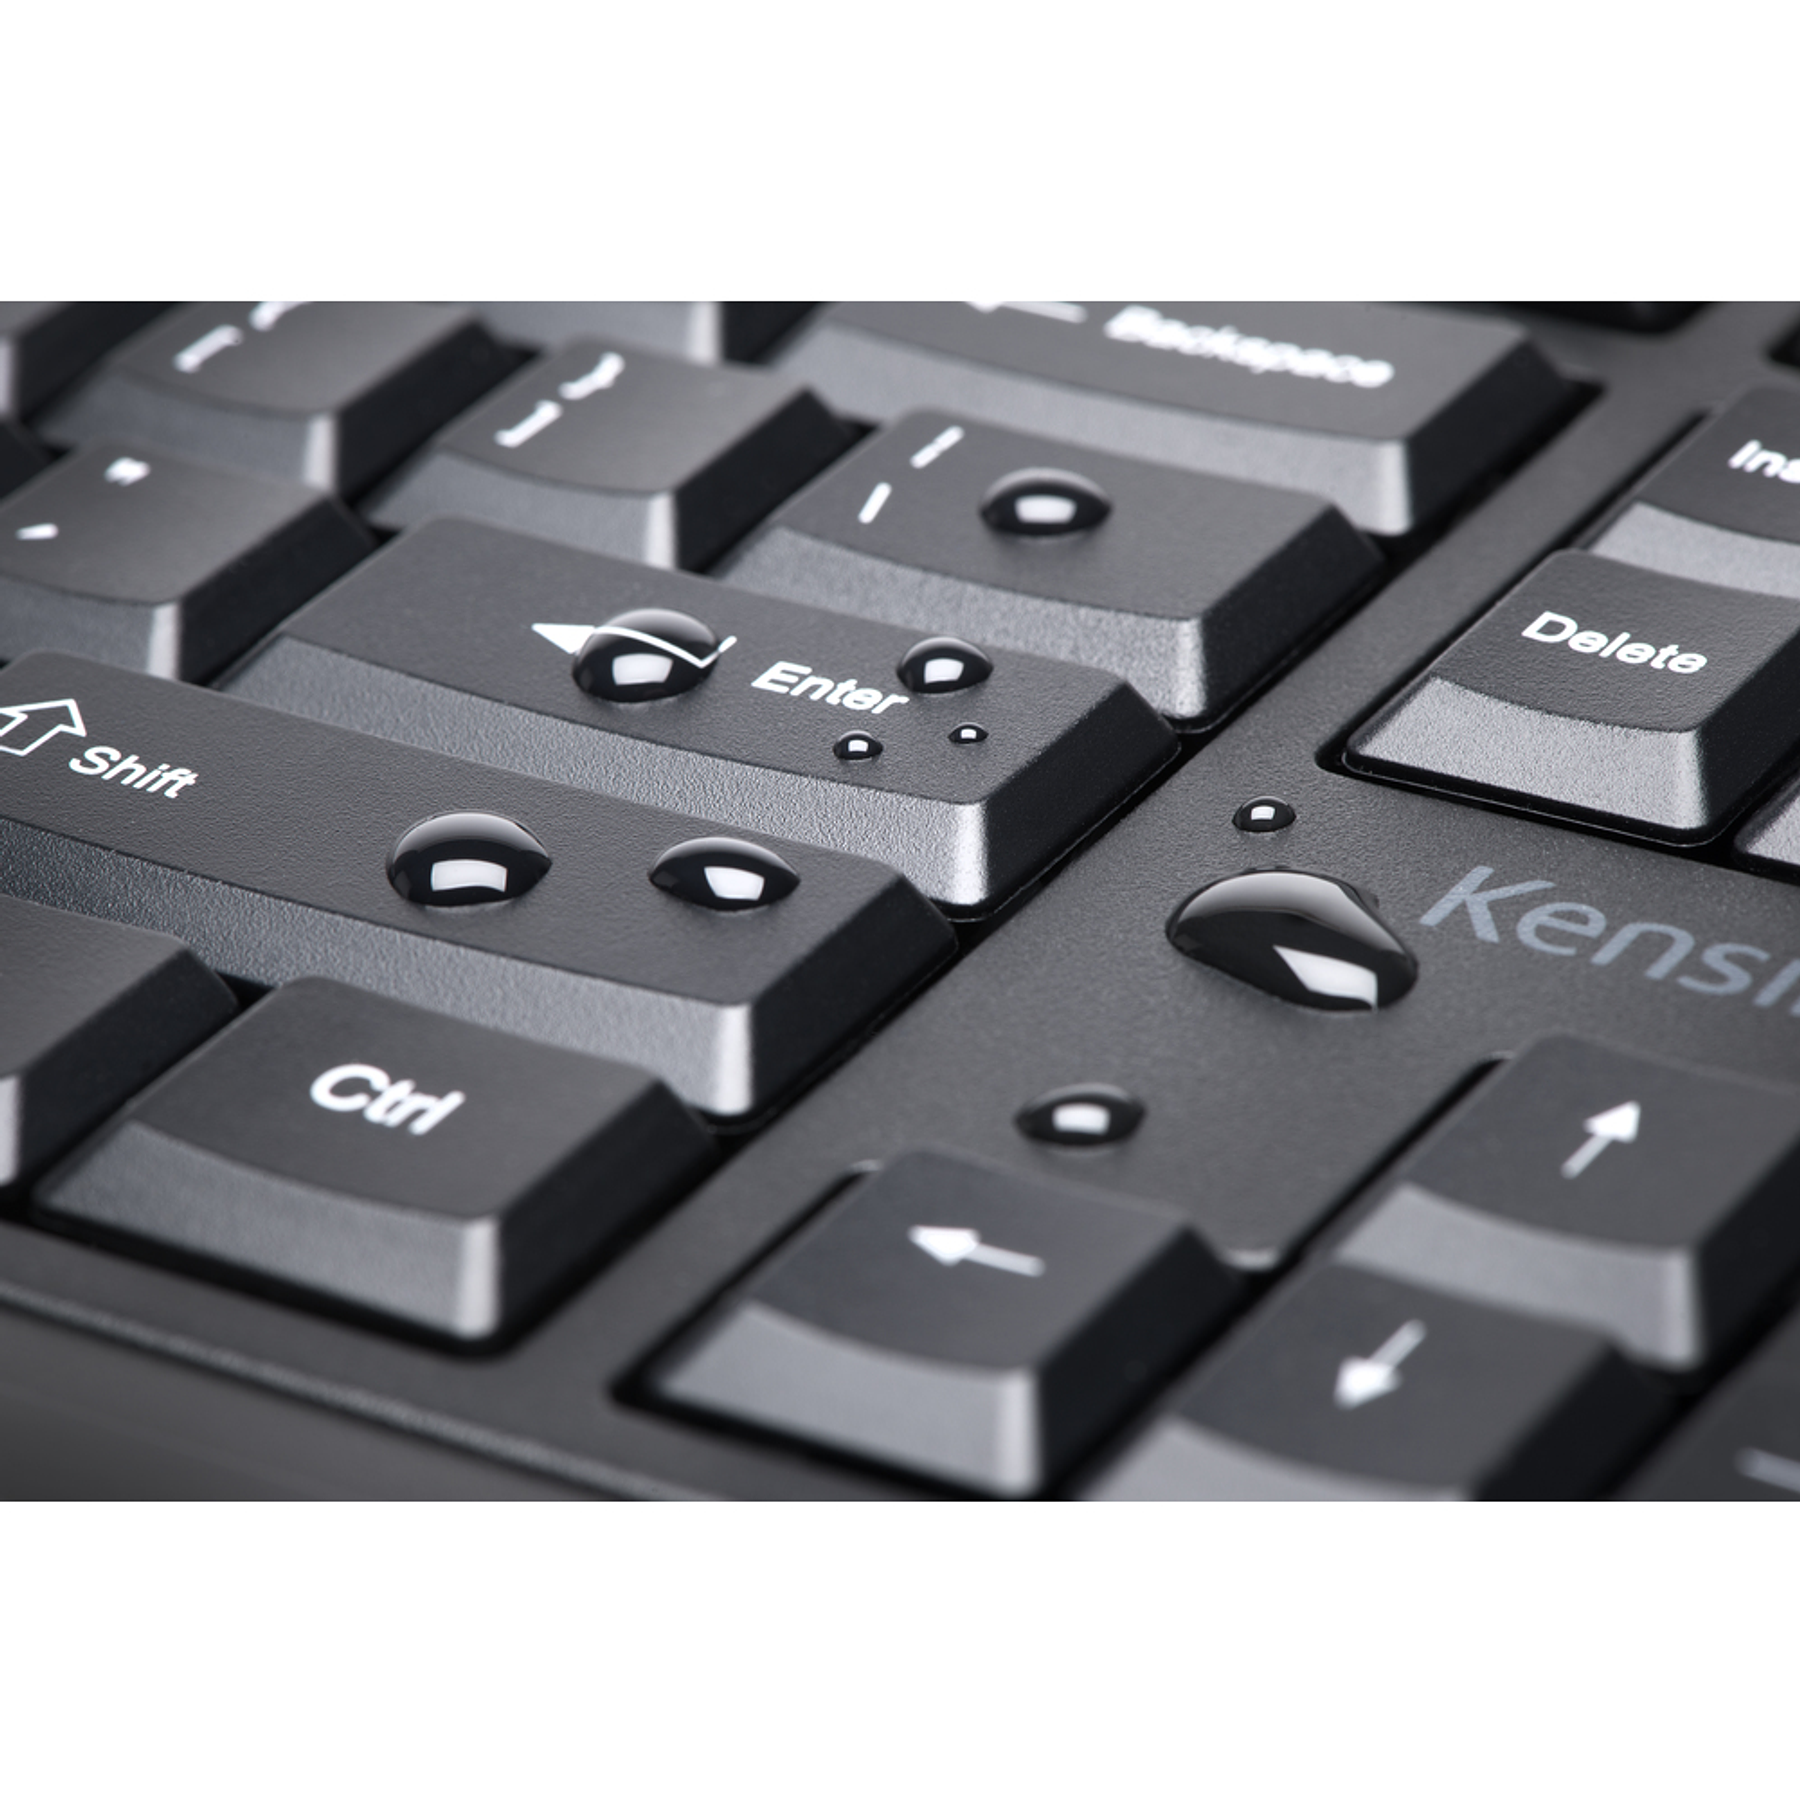 Kensington teclado ergonomico Pro Fit alambrico color negro